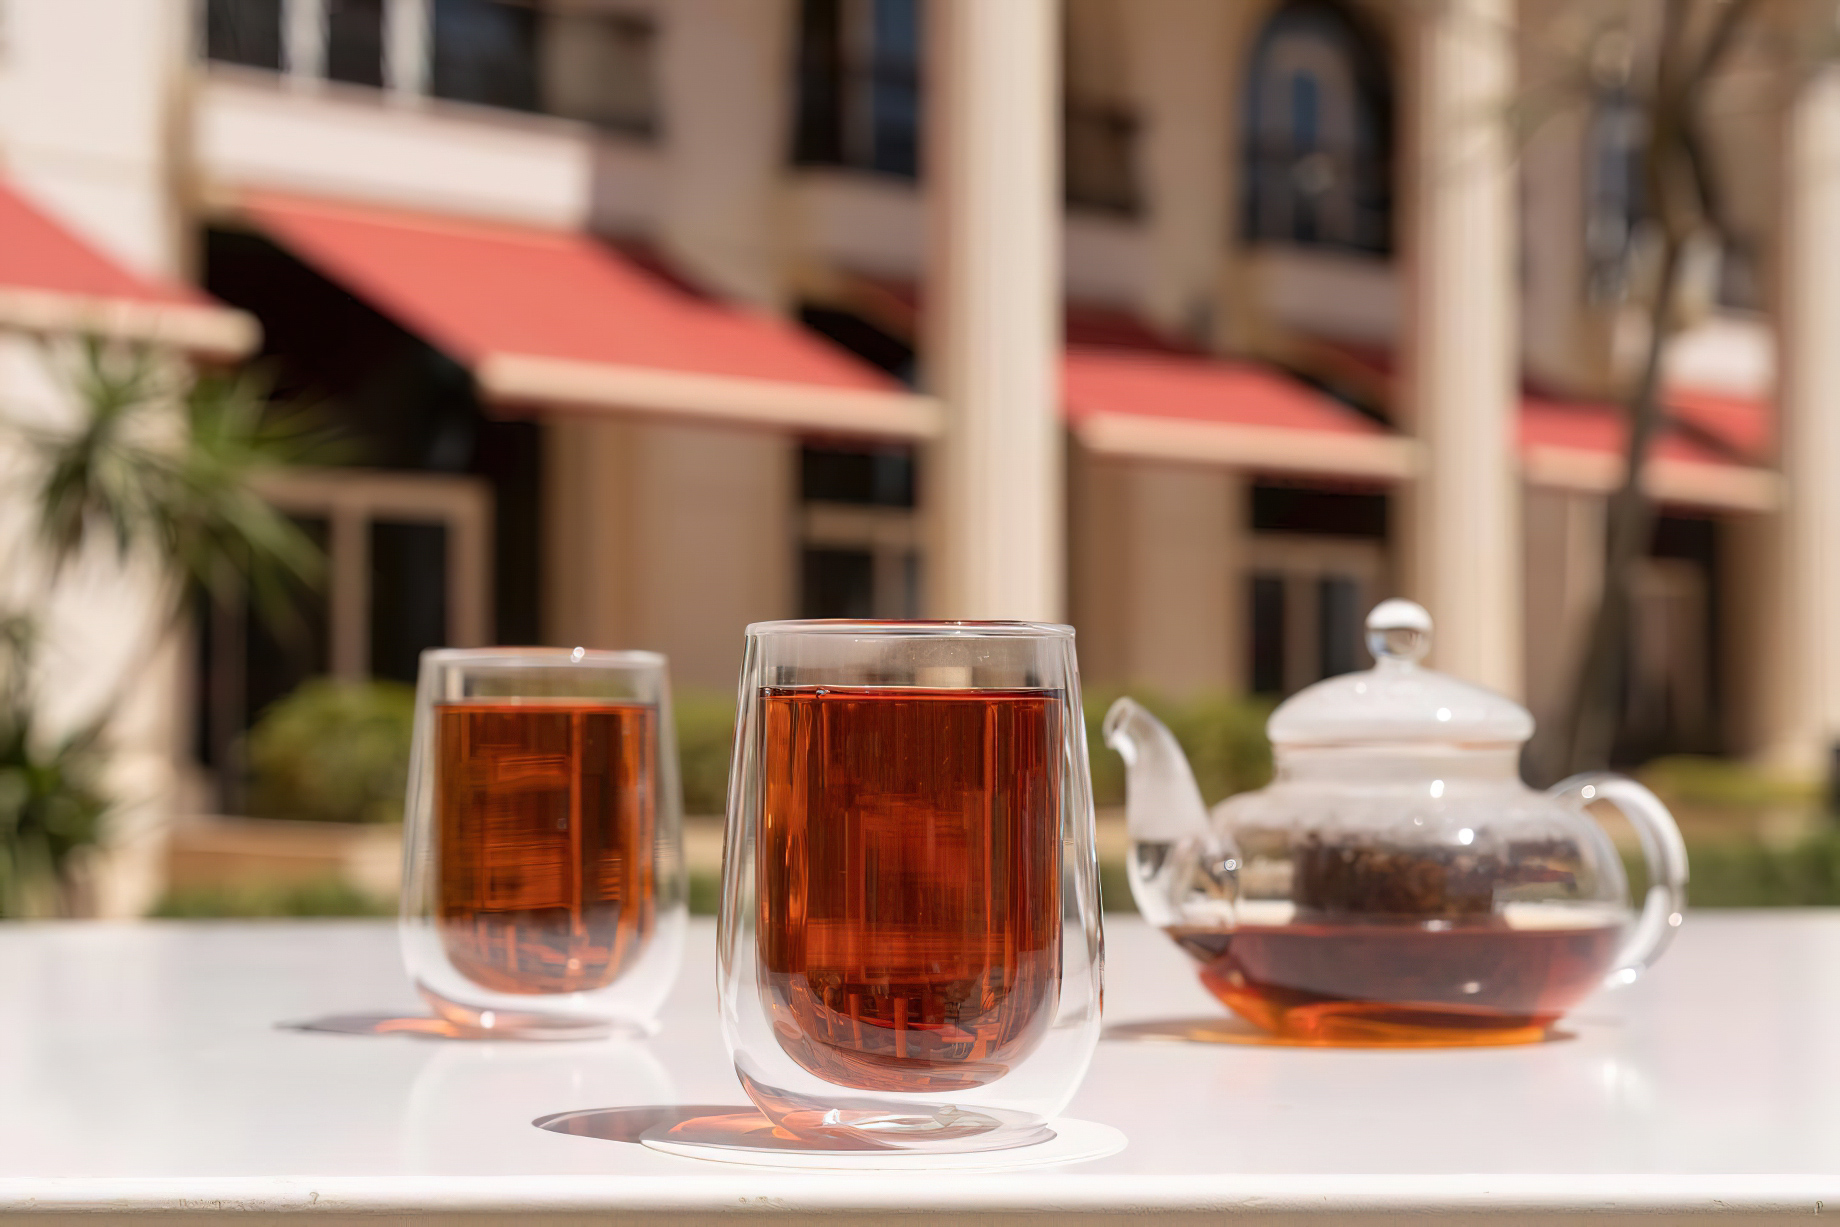 The St. Regis Almasa Hotel – Cairo, Egypt – Outside Tea Service